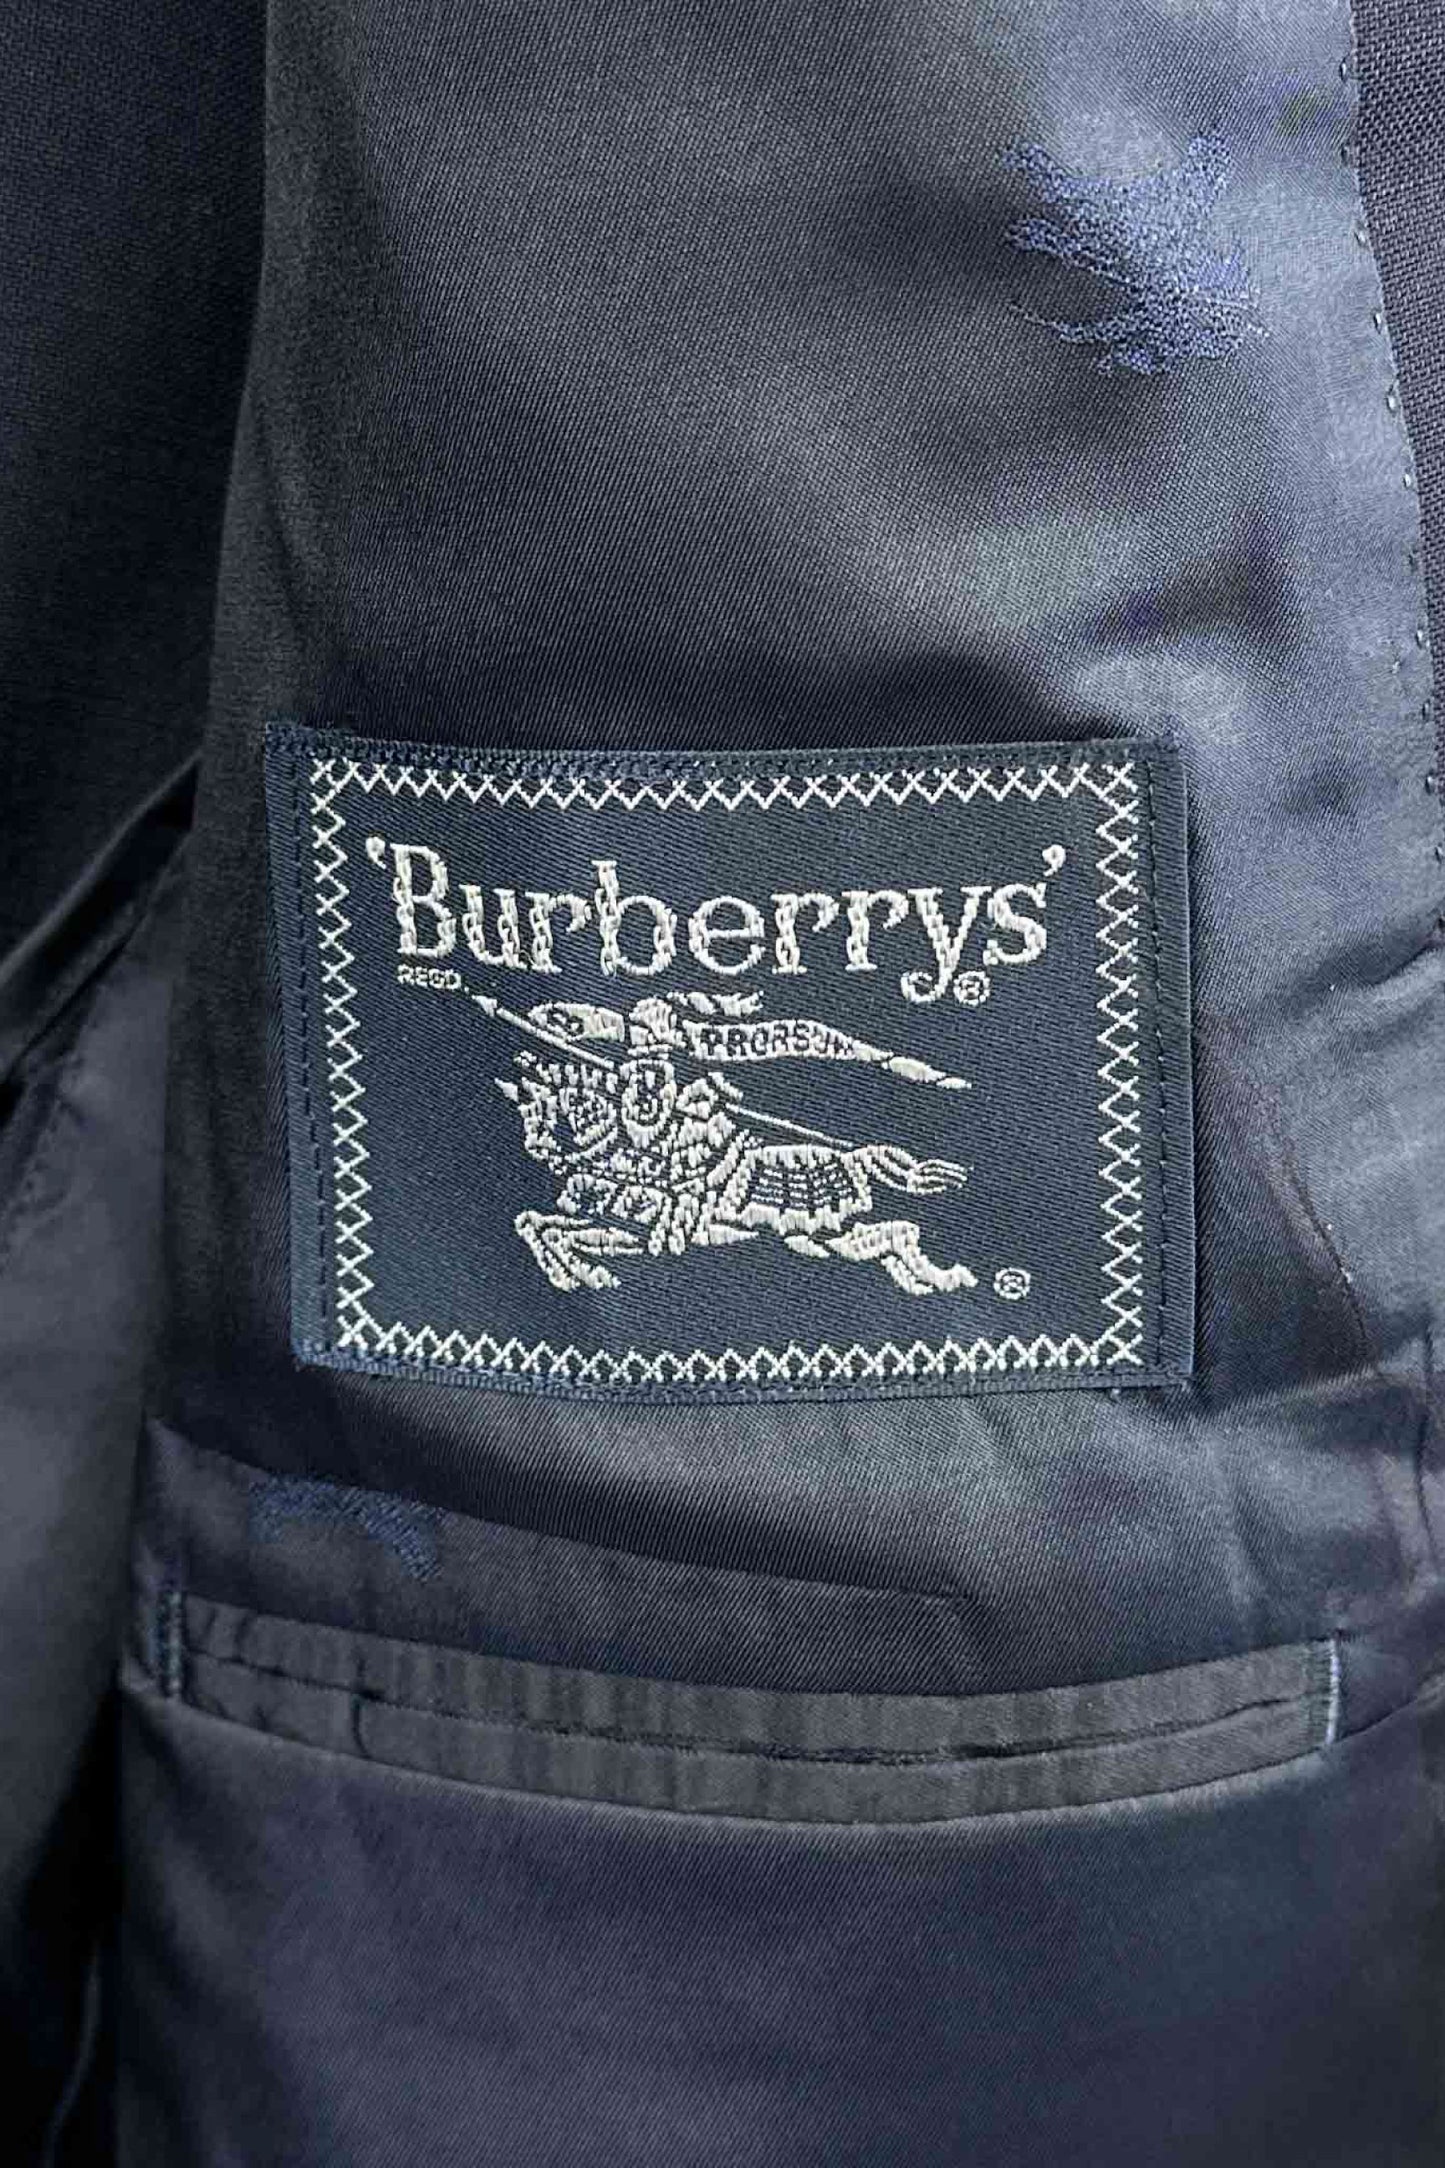 80‘s Burberrys navy jacket